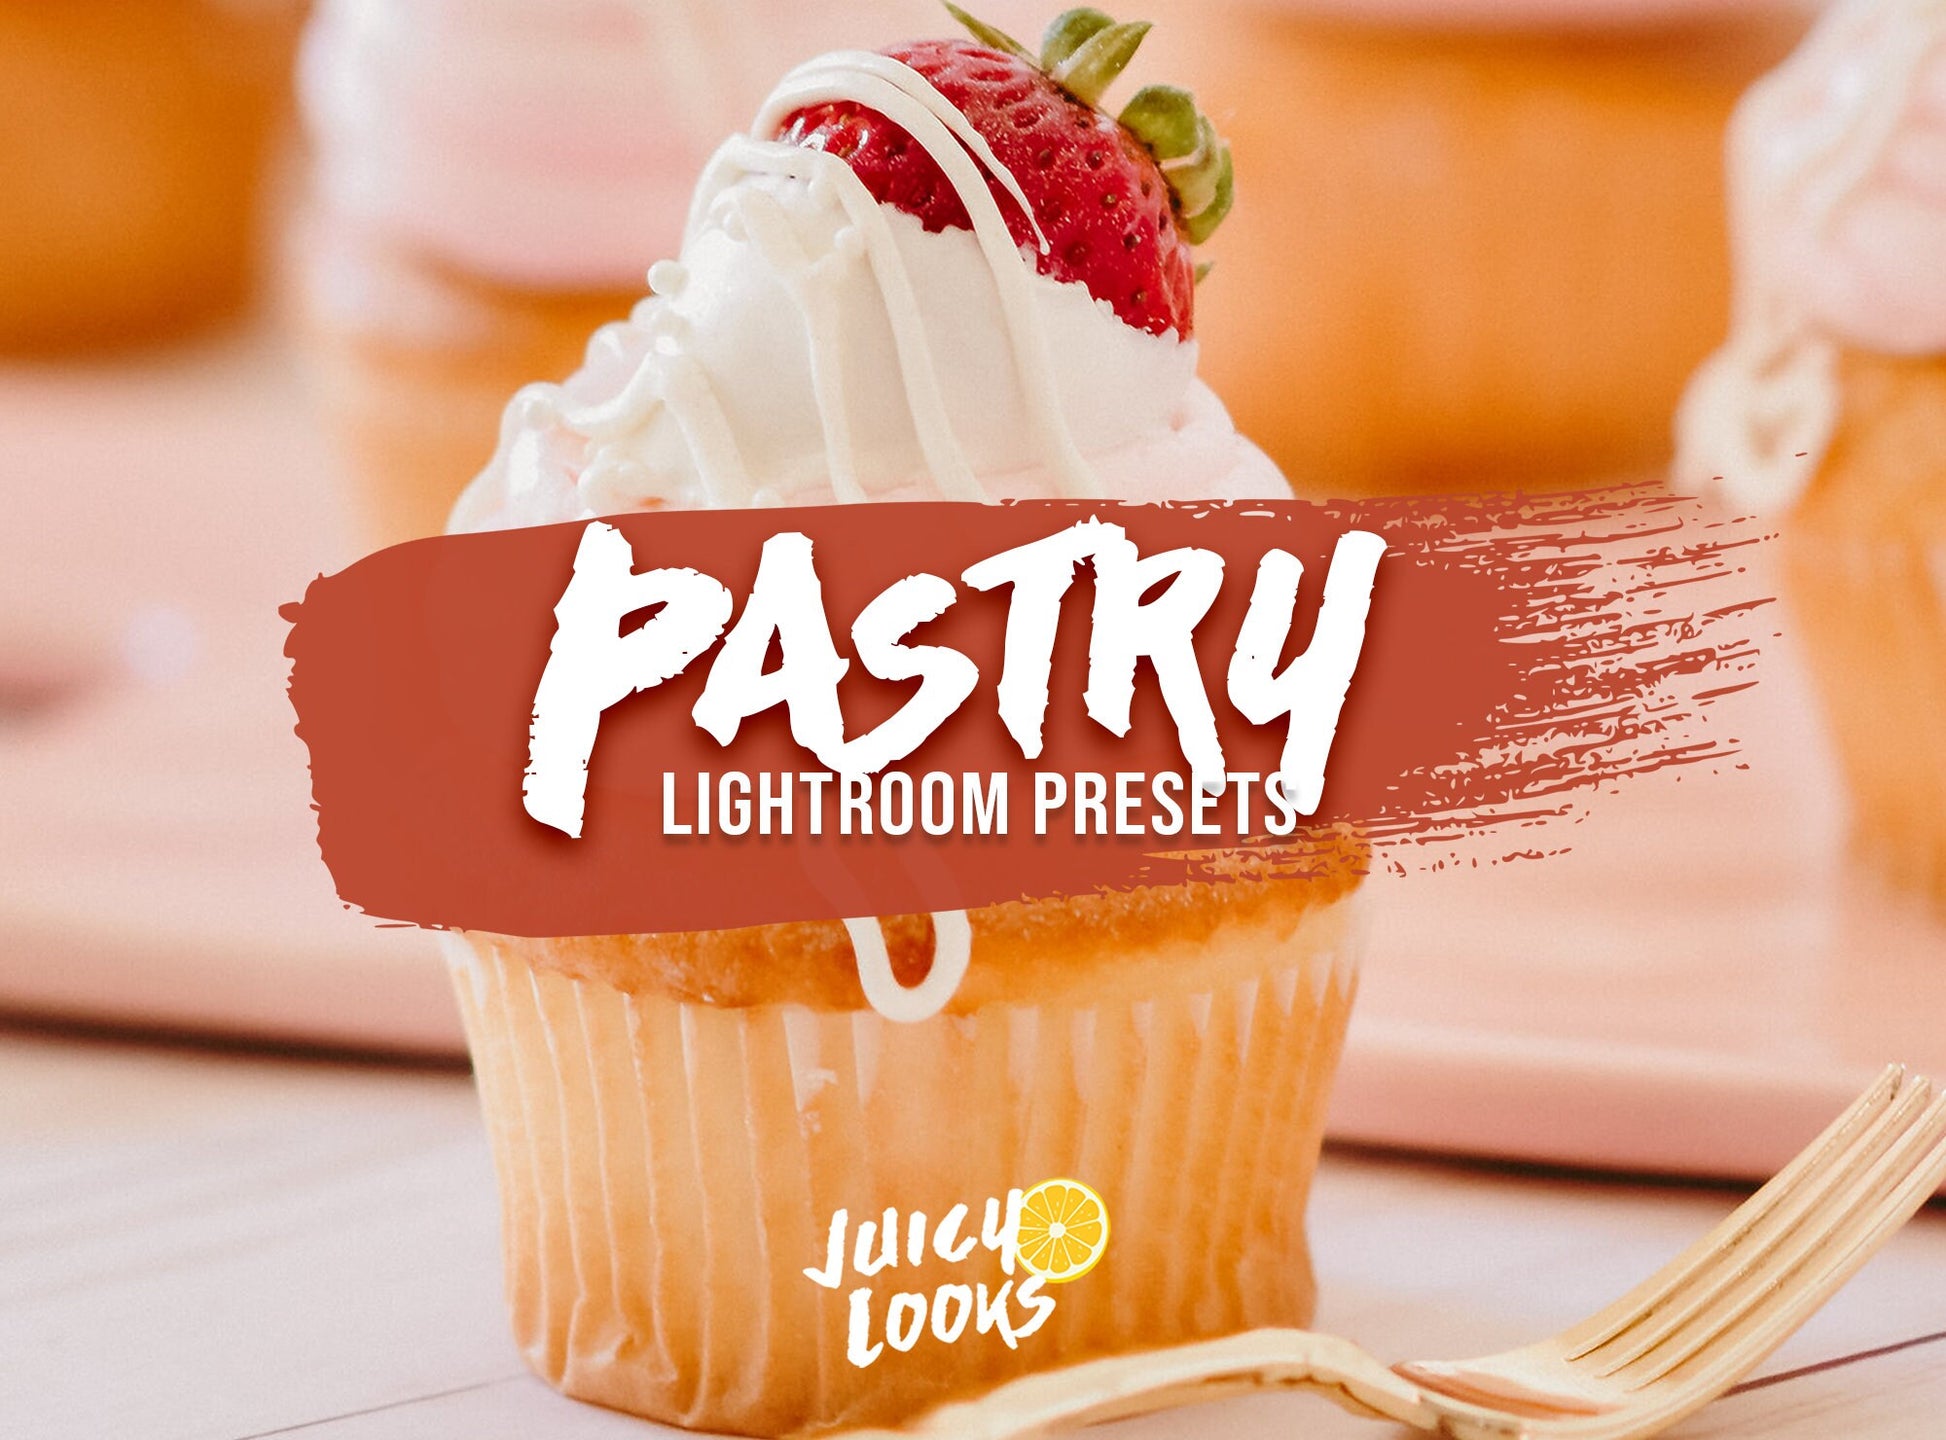 Pastry Lightroom Presets for Mobile & Desktop - Juicy Looks Presets